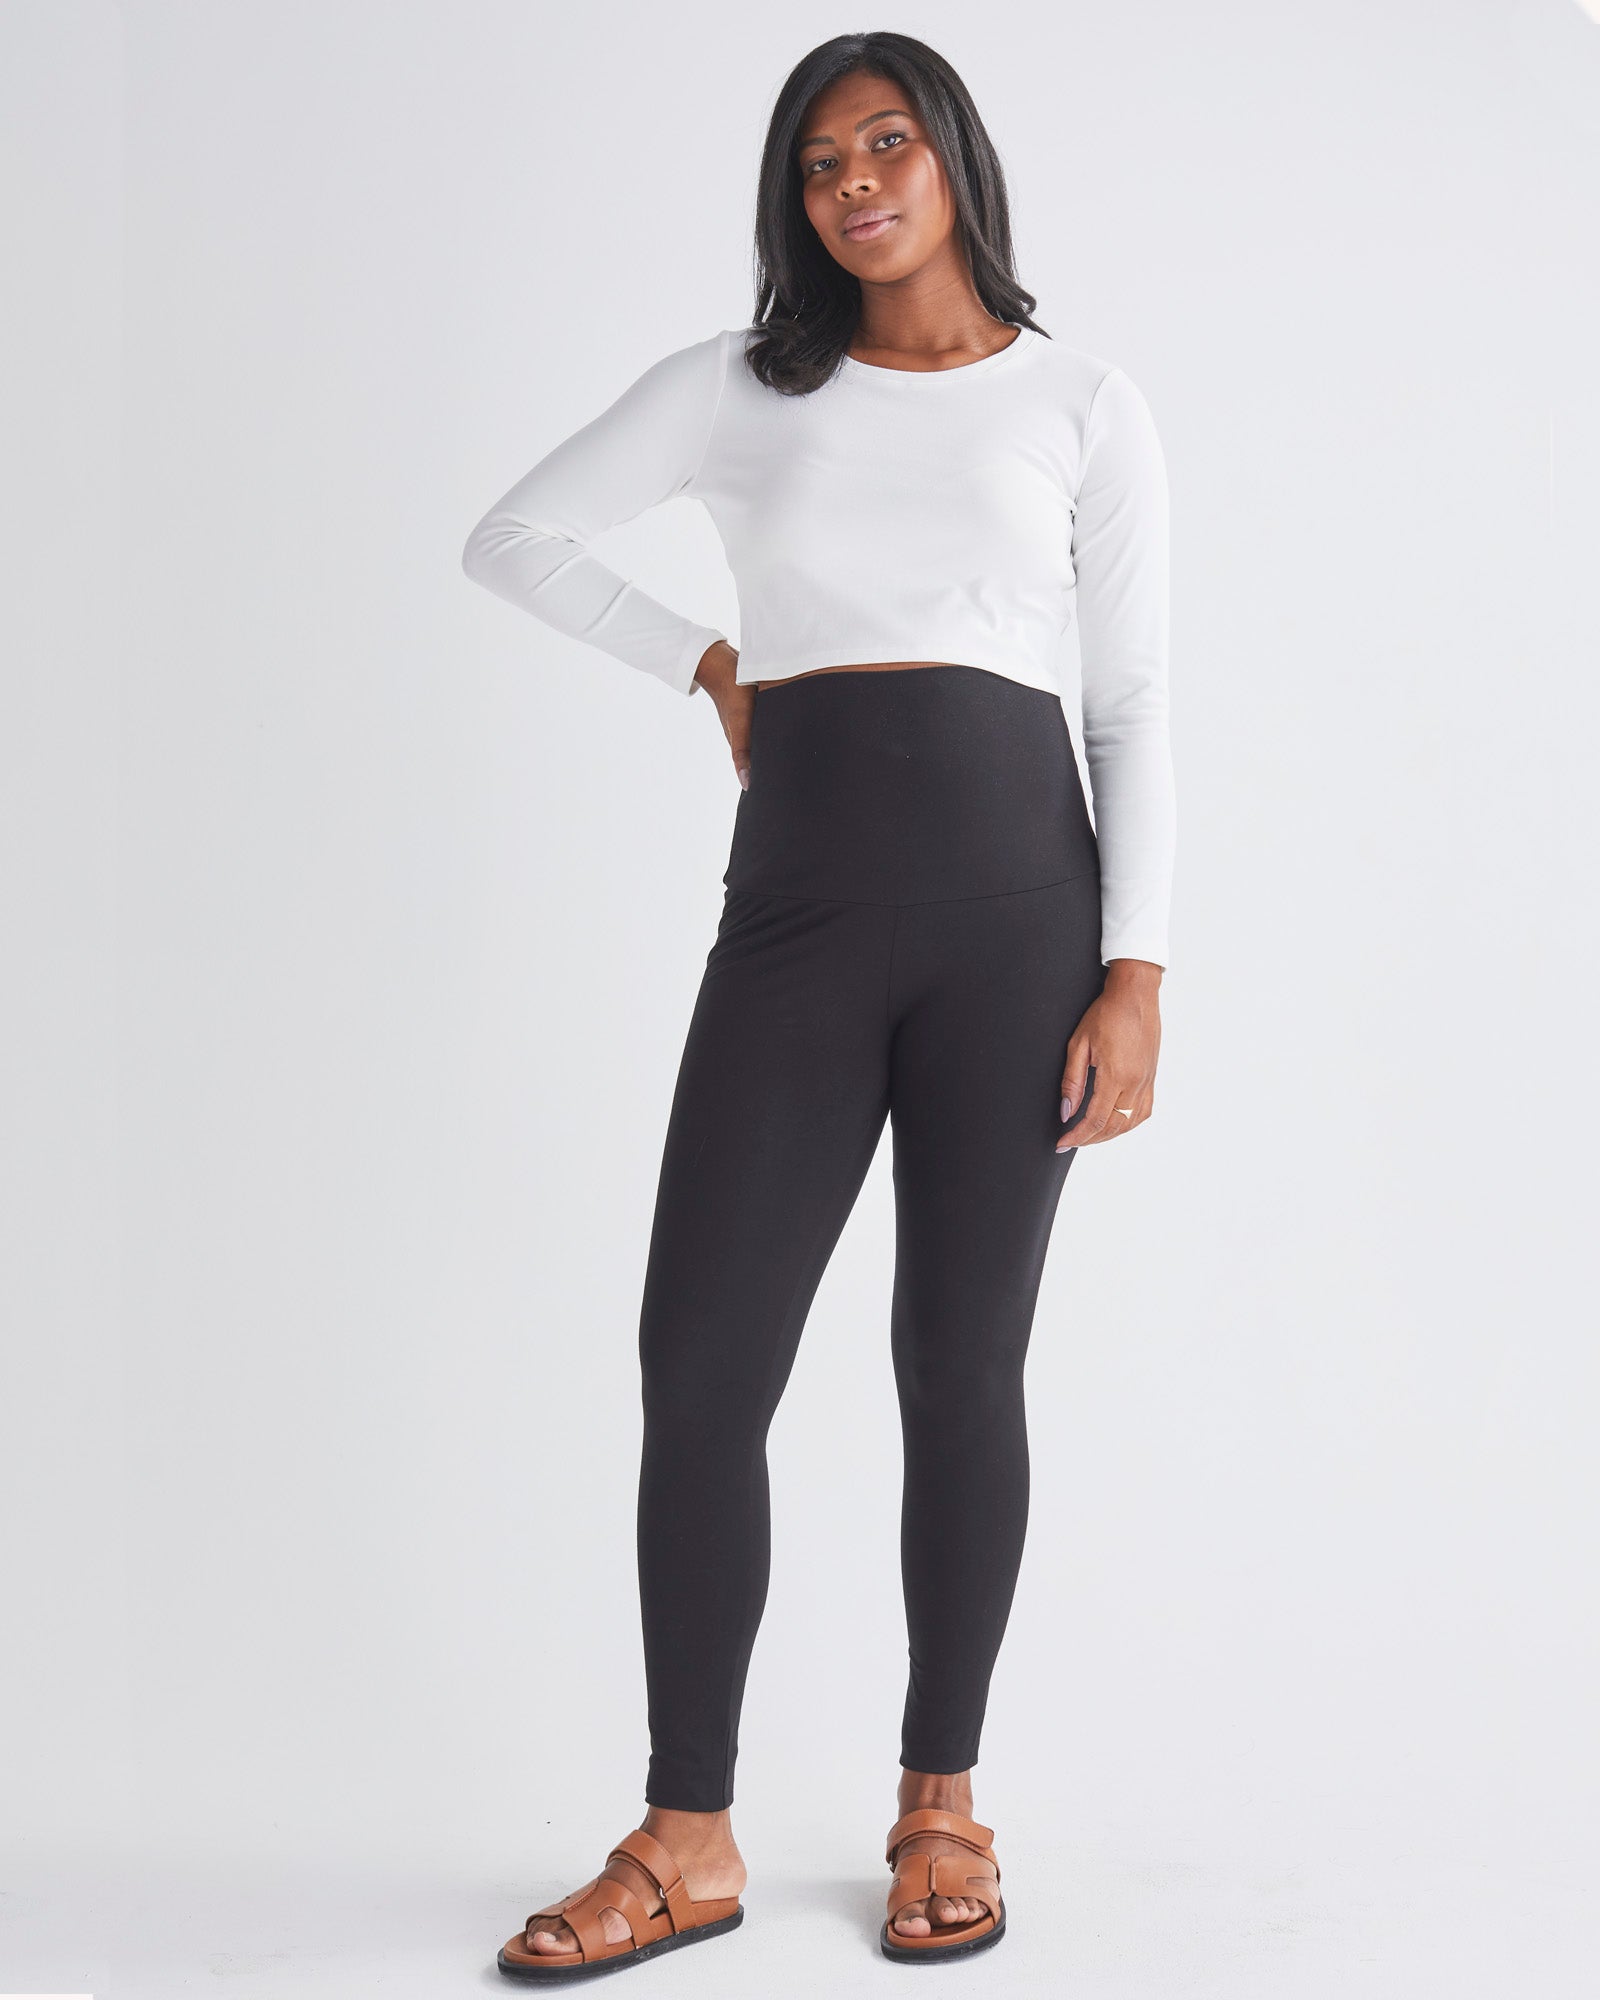 Shop Plus Size Australian Cotton Full Length Legging in Black